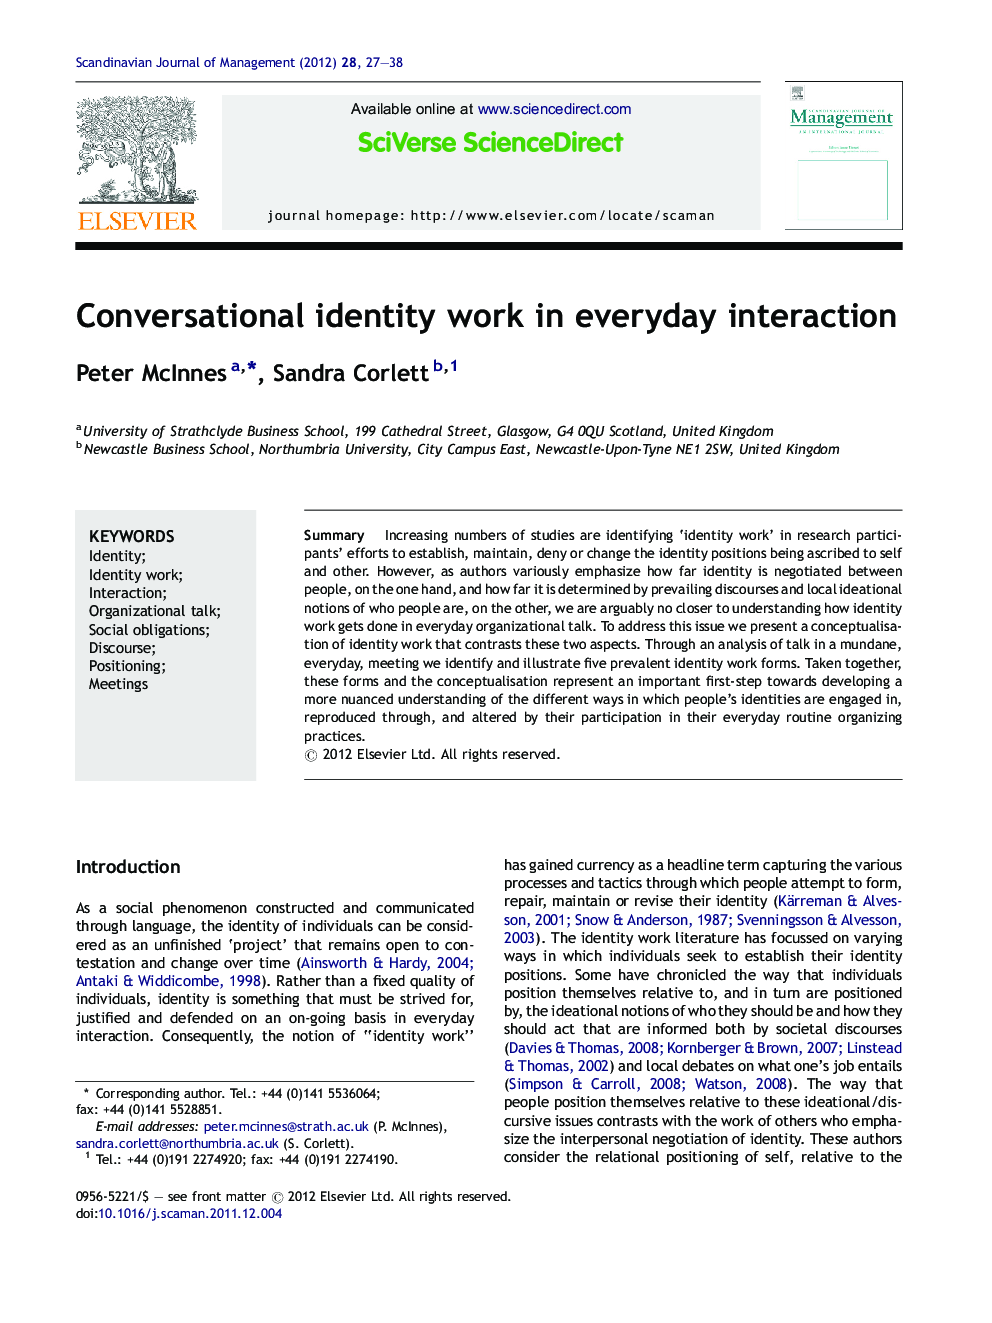 Conversational identity work in everyday interaction